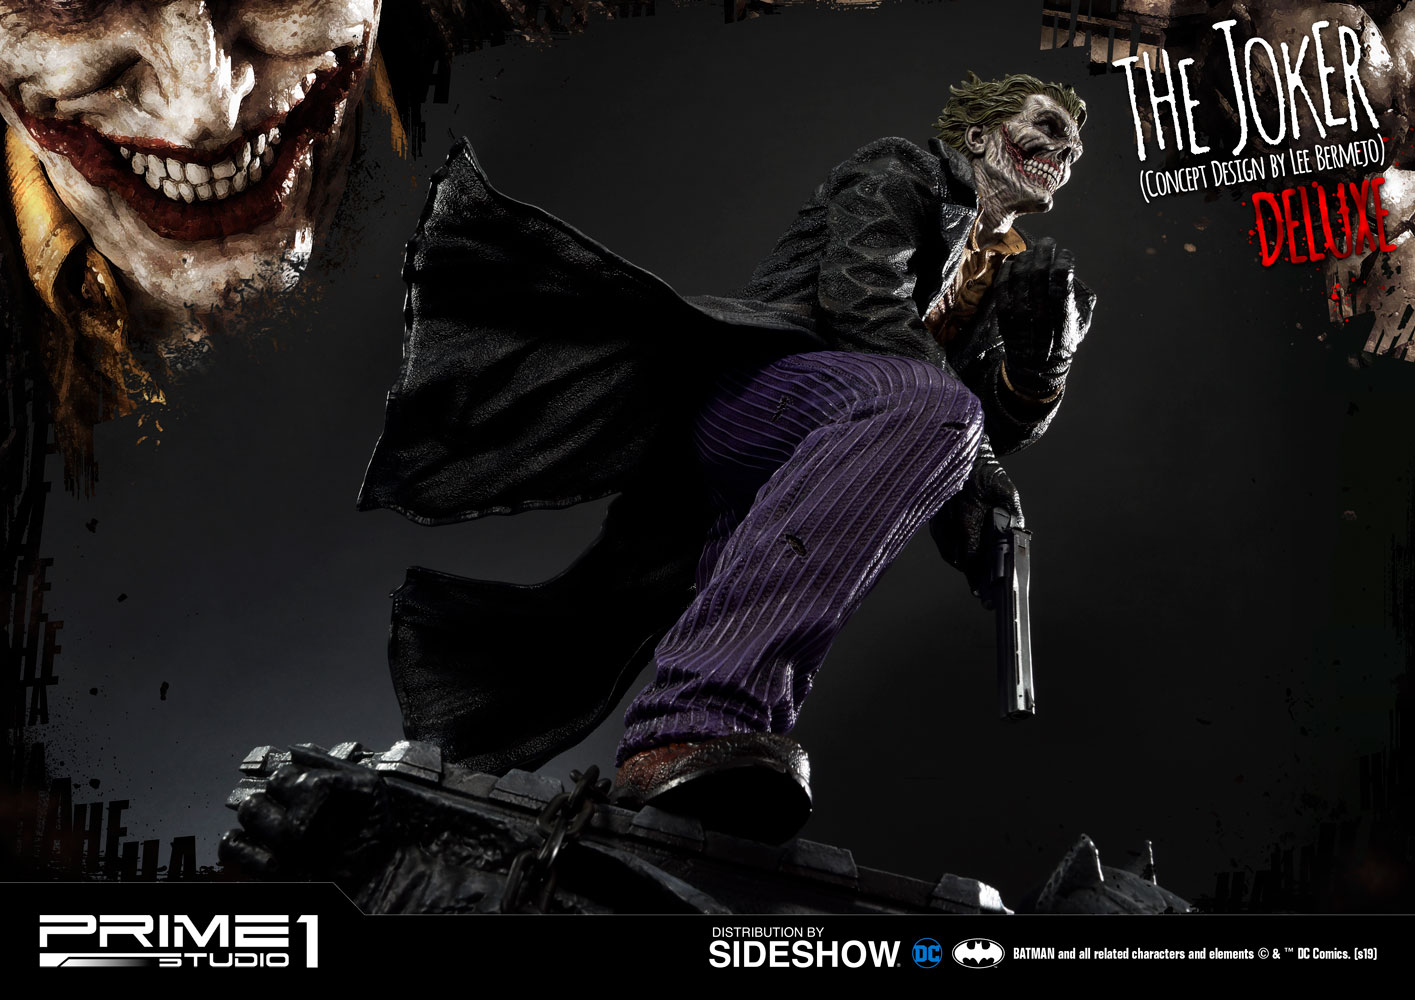 The Joker Deluxe Version (Concept Design by Lee Bermejo) (Prototype Shown) View 6